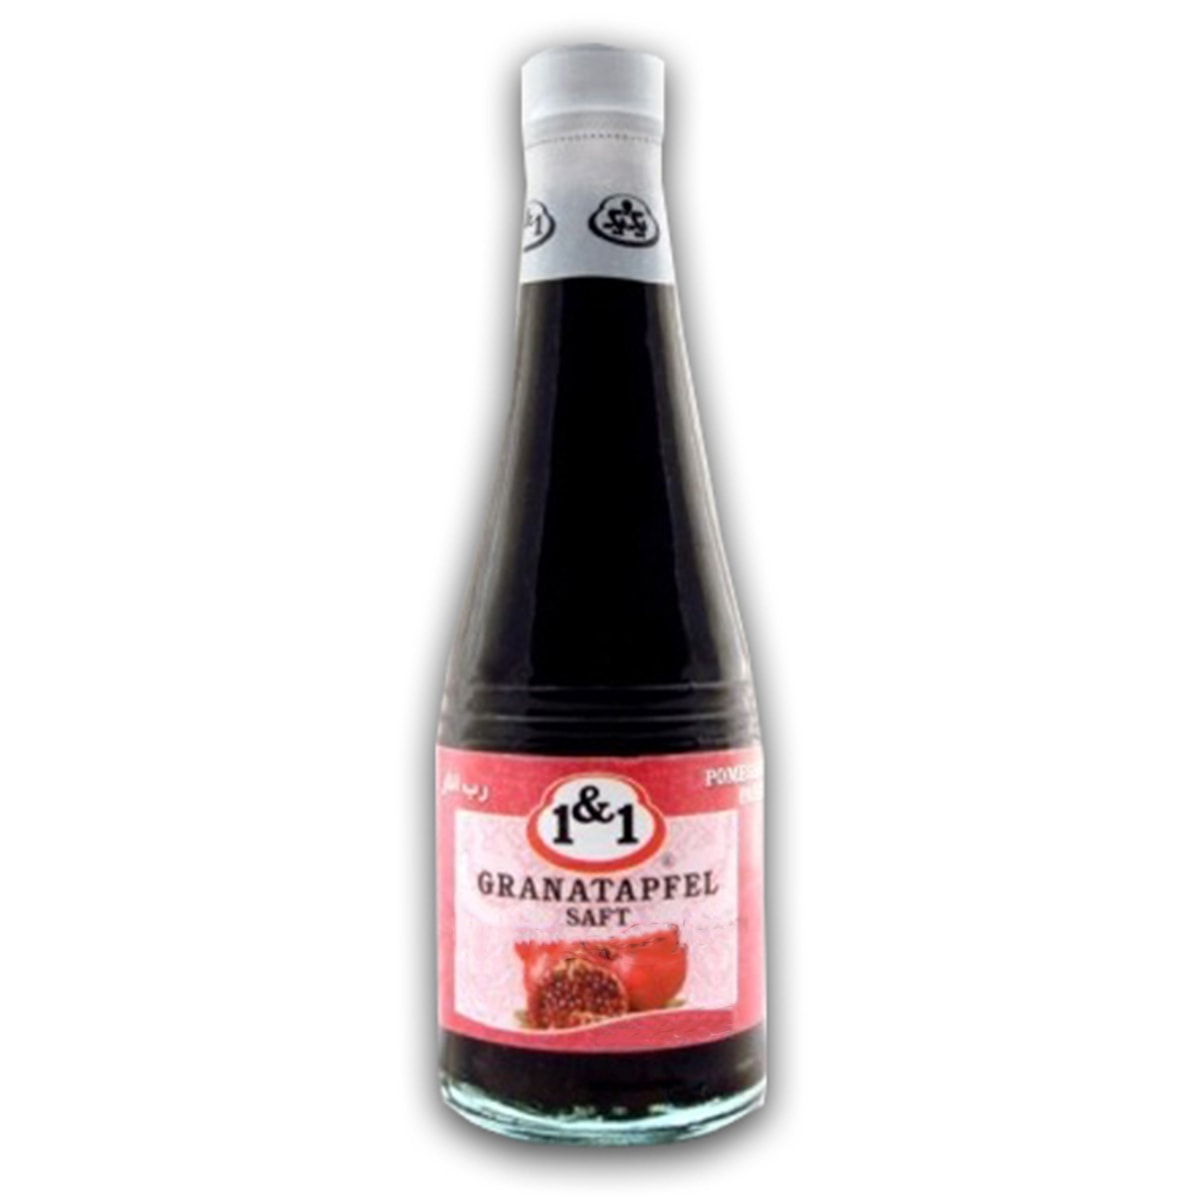 Buy 1 & 1 Pomegranate Paste (Granatapfel Saft) - 330 ml